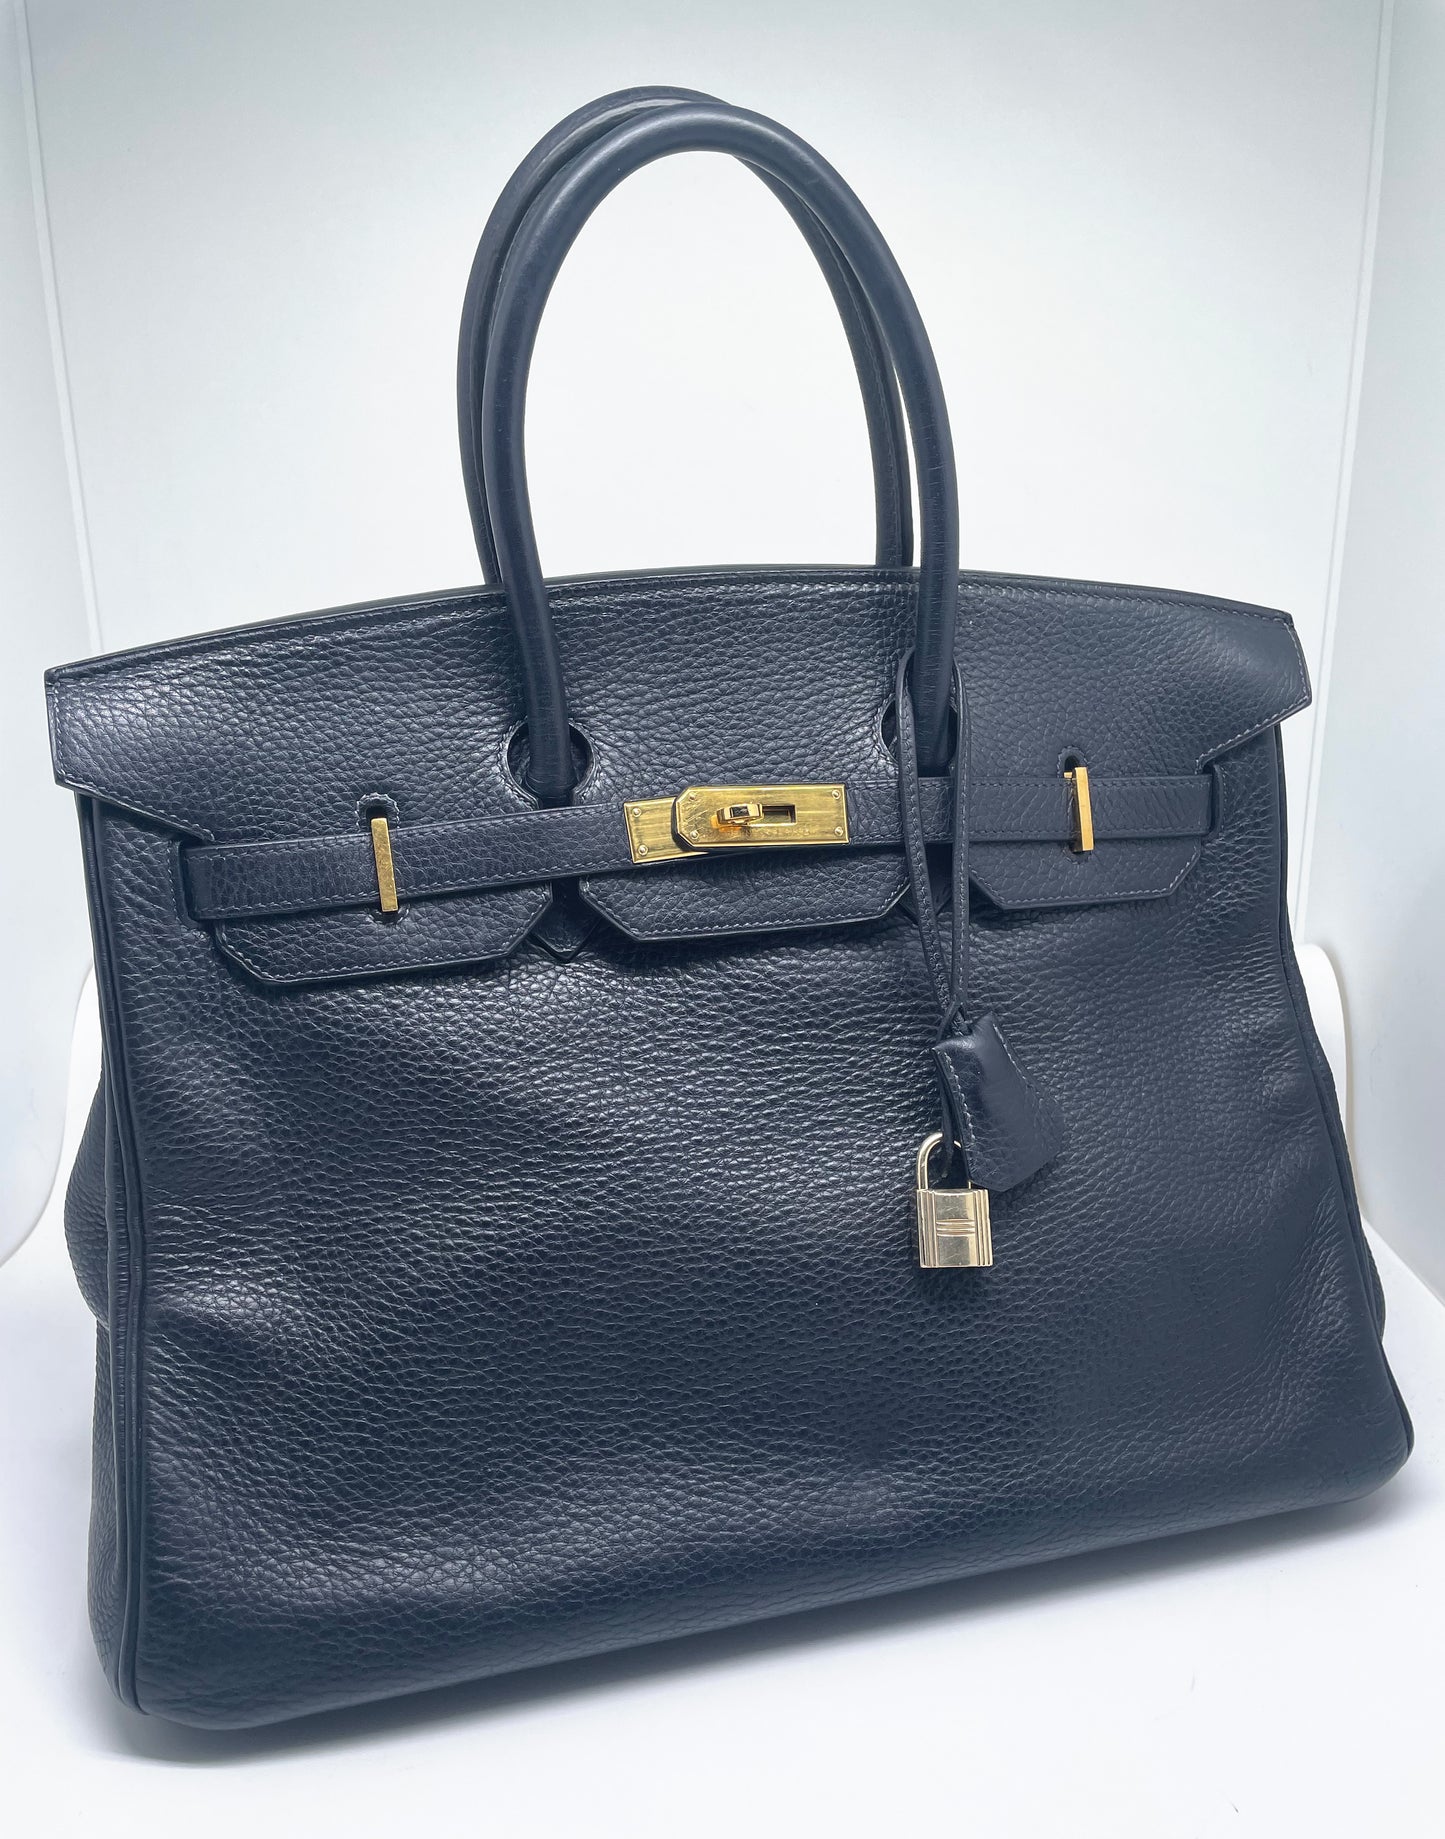 Sac Hermès Birkin en cuir Togo Bleu Nuit 35 cm, garniture en métal doré.